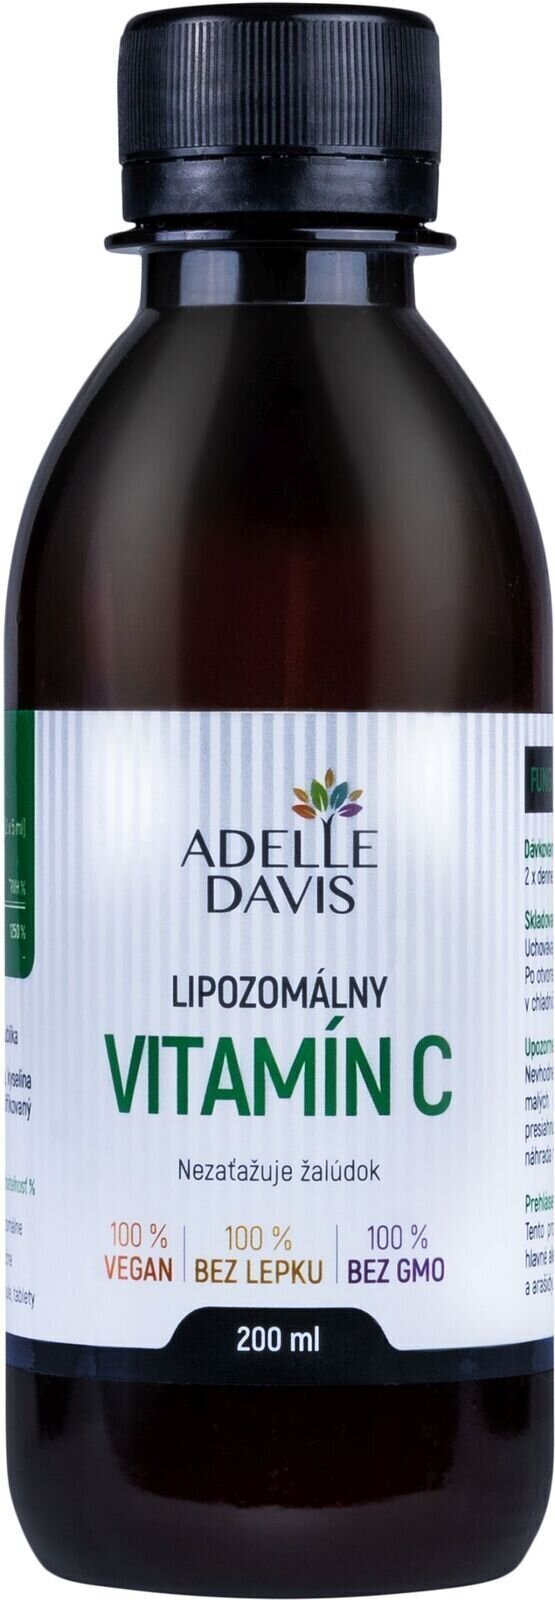 Vitamine C Adelle Davis Liposomal Vitamin C 200 ml Vitamine C